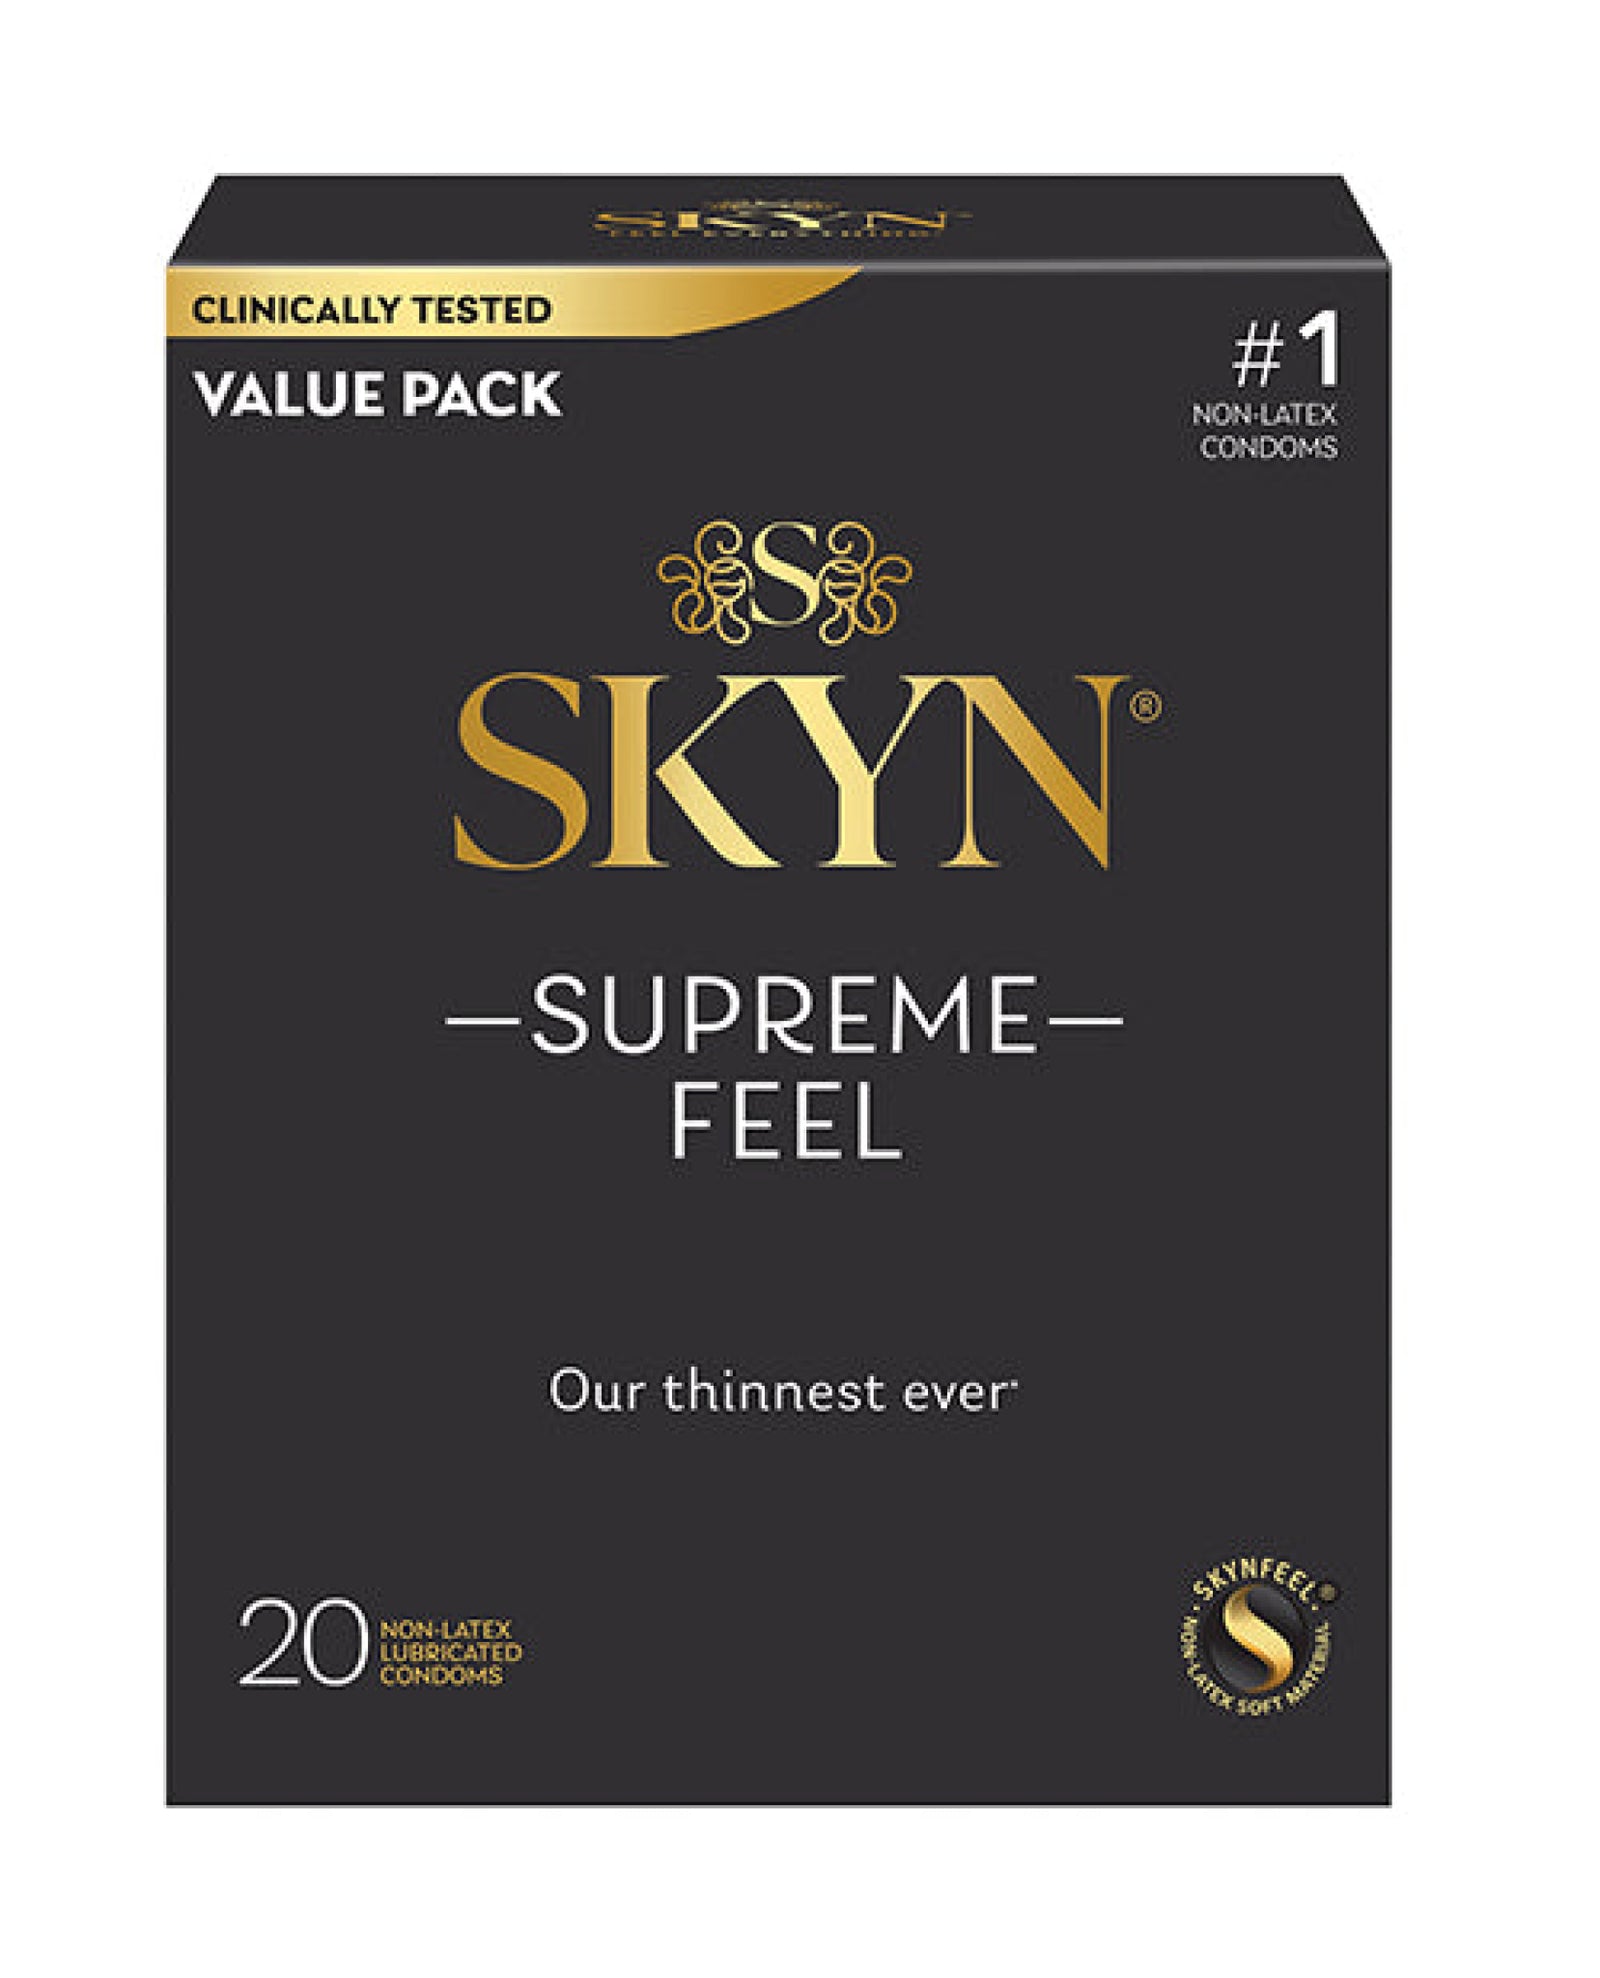 Lifestyles SKYN Supreme Feel Condoms - Pack of 20 Paradise Marketing